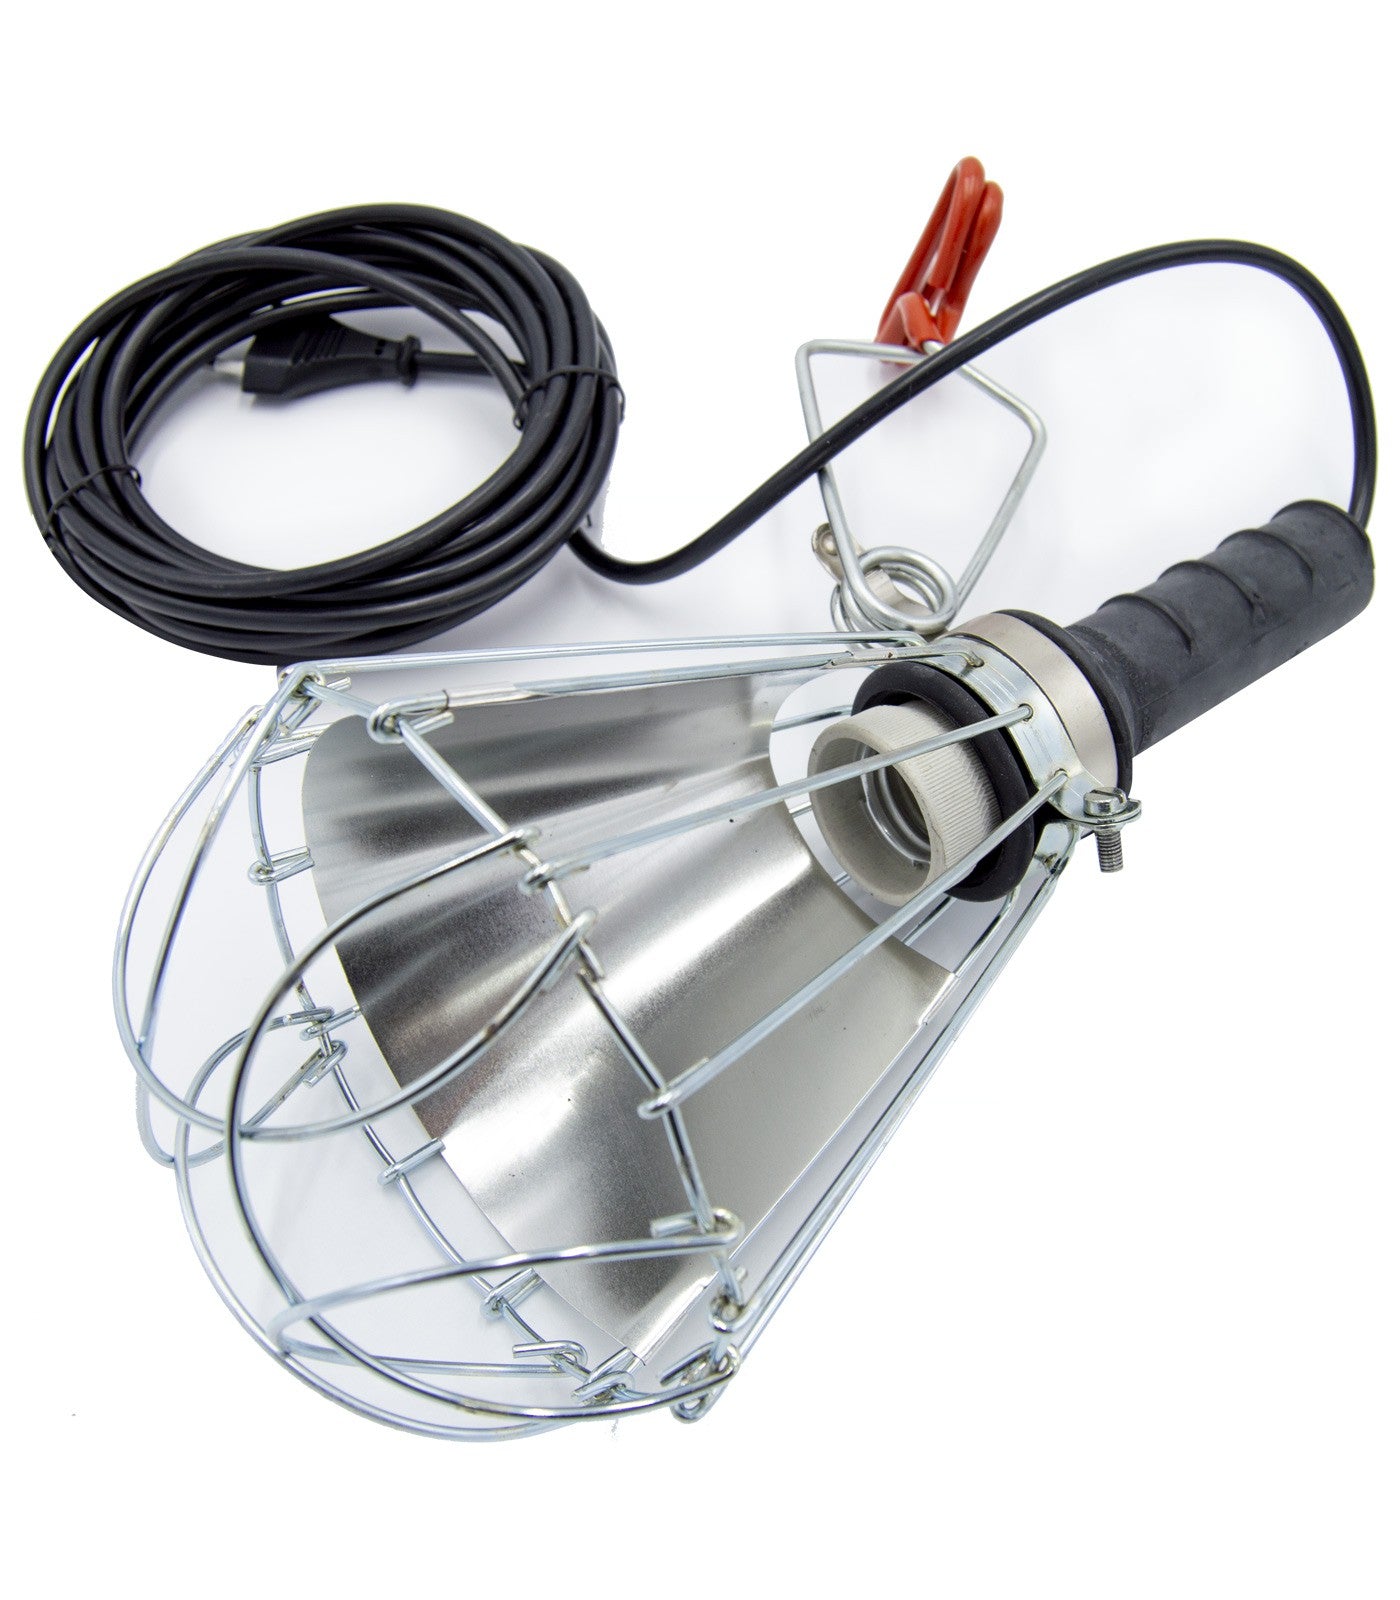 LAMPARA PORTATIL METAL C/TECLA C/CABLE 220V